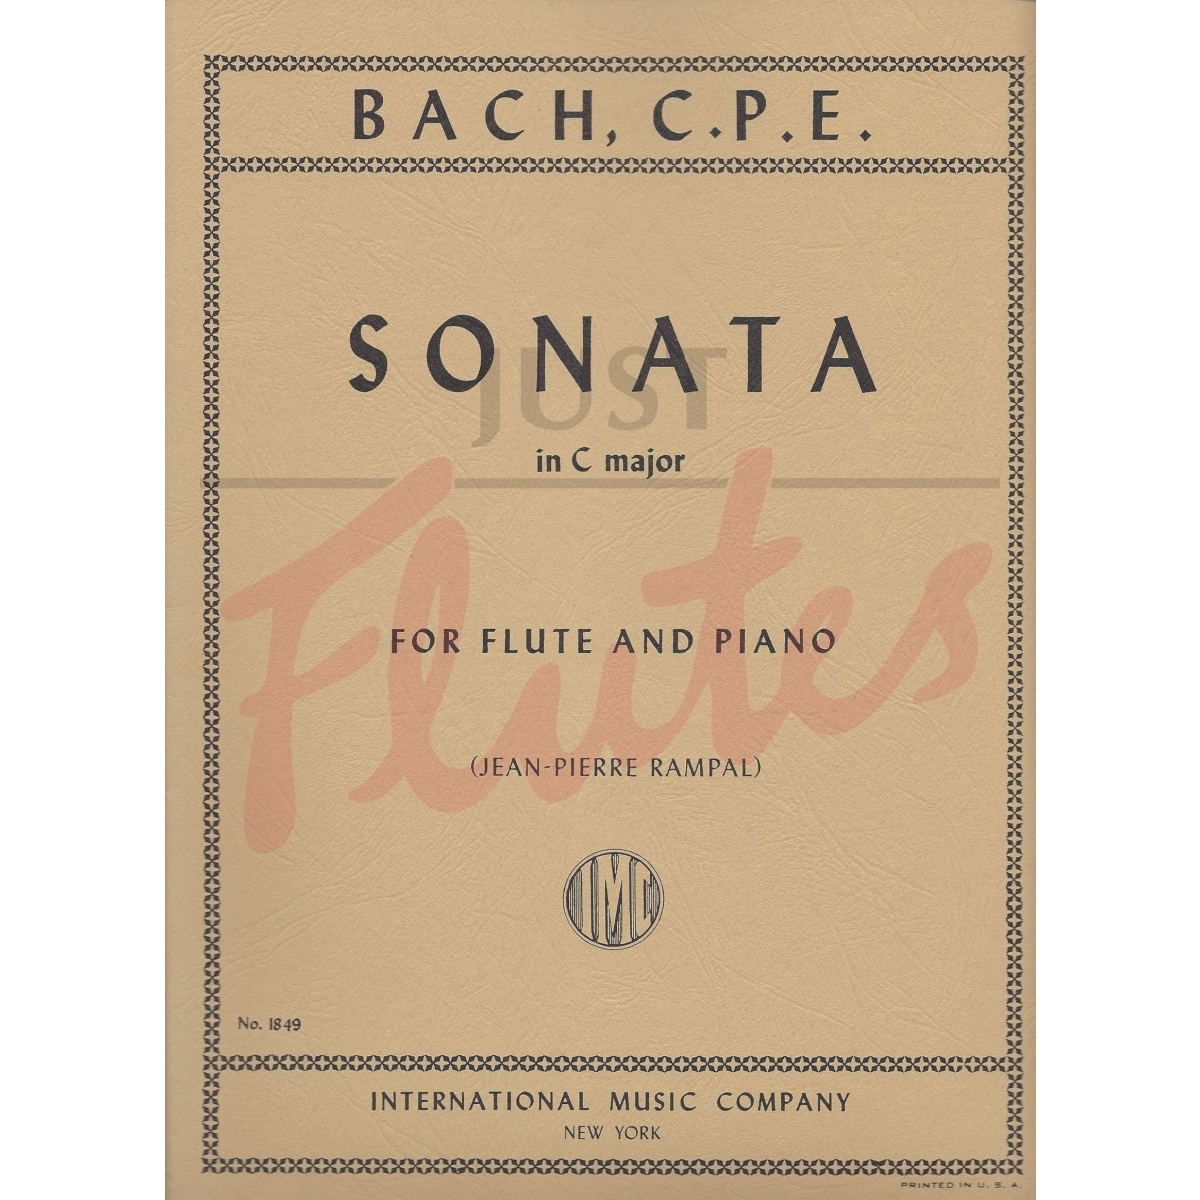 Sonata in C major for Flute and Piano